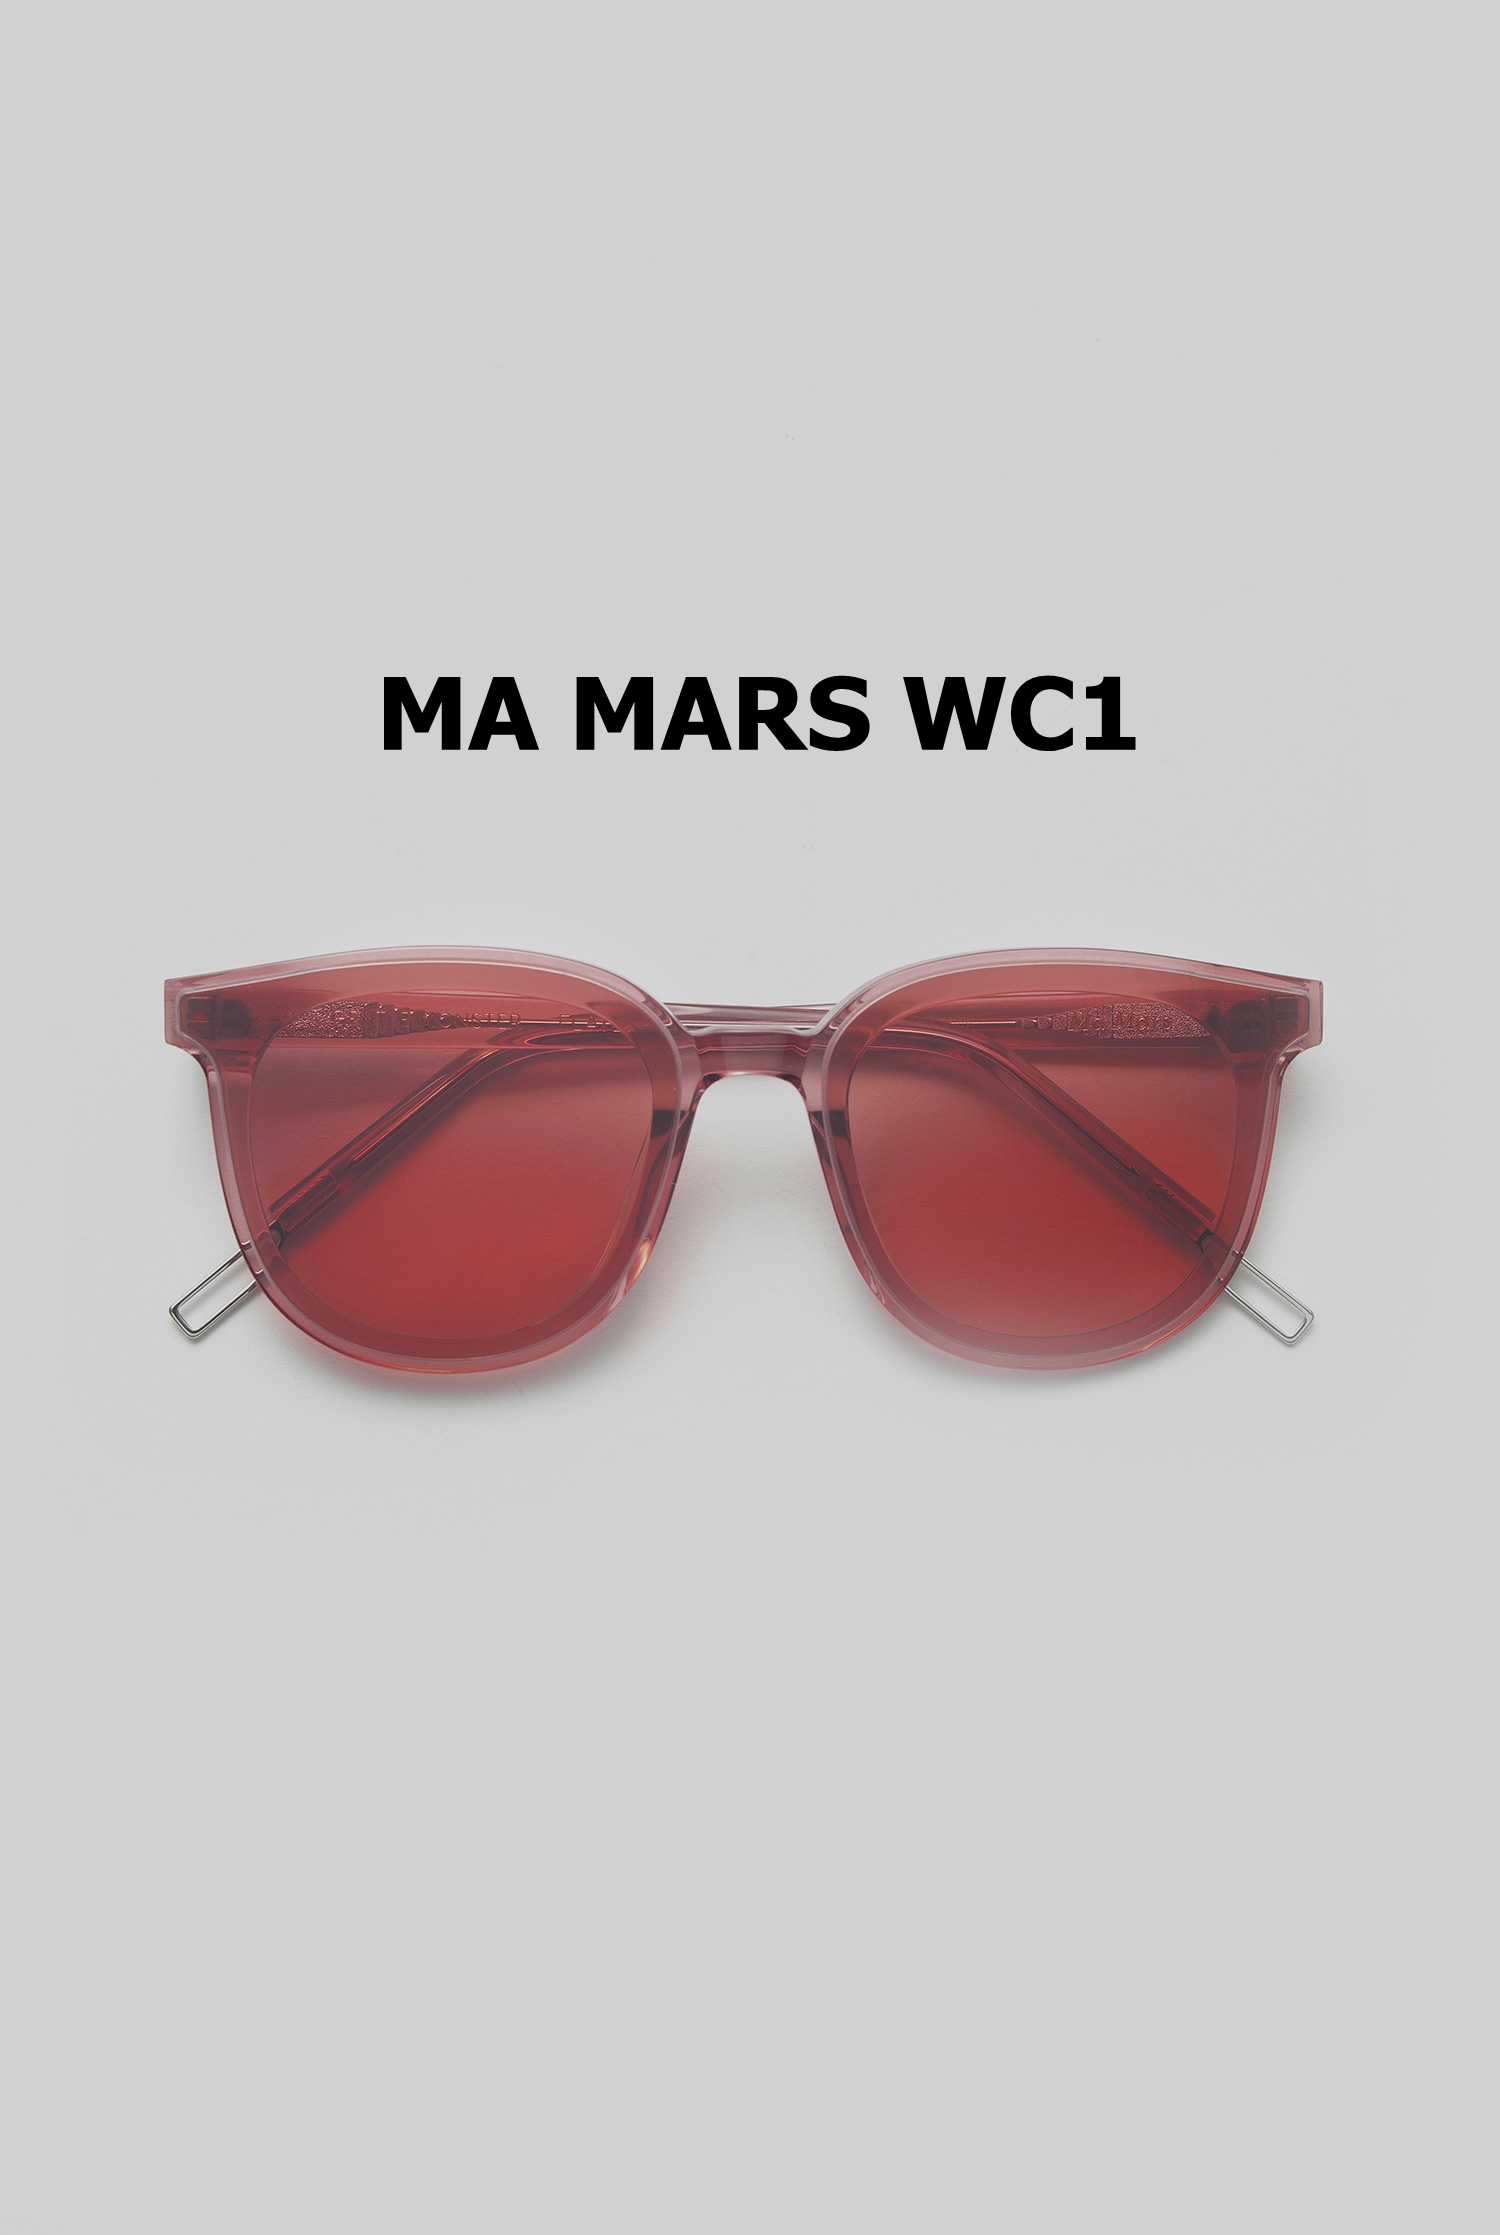 MA MARS WC1